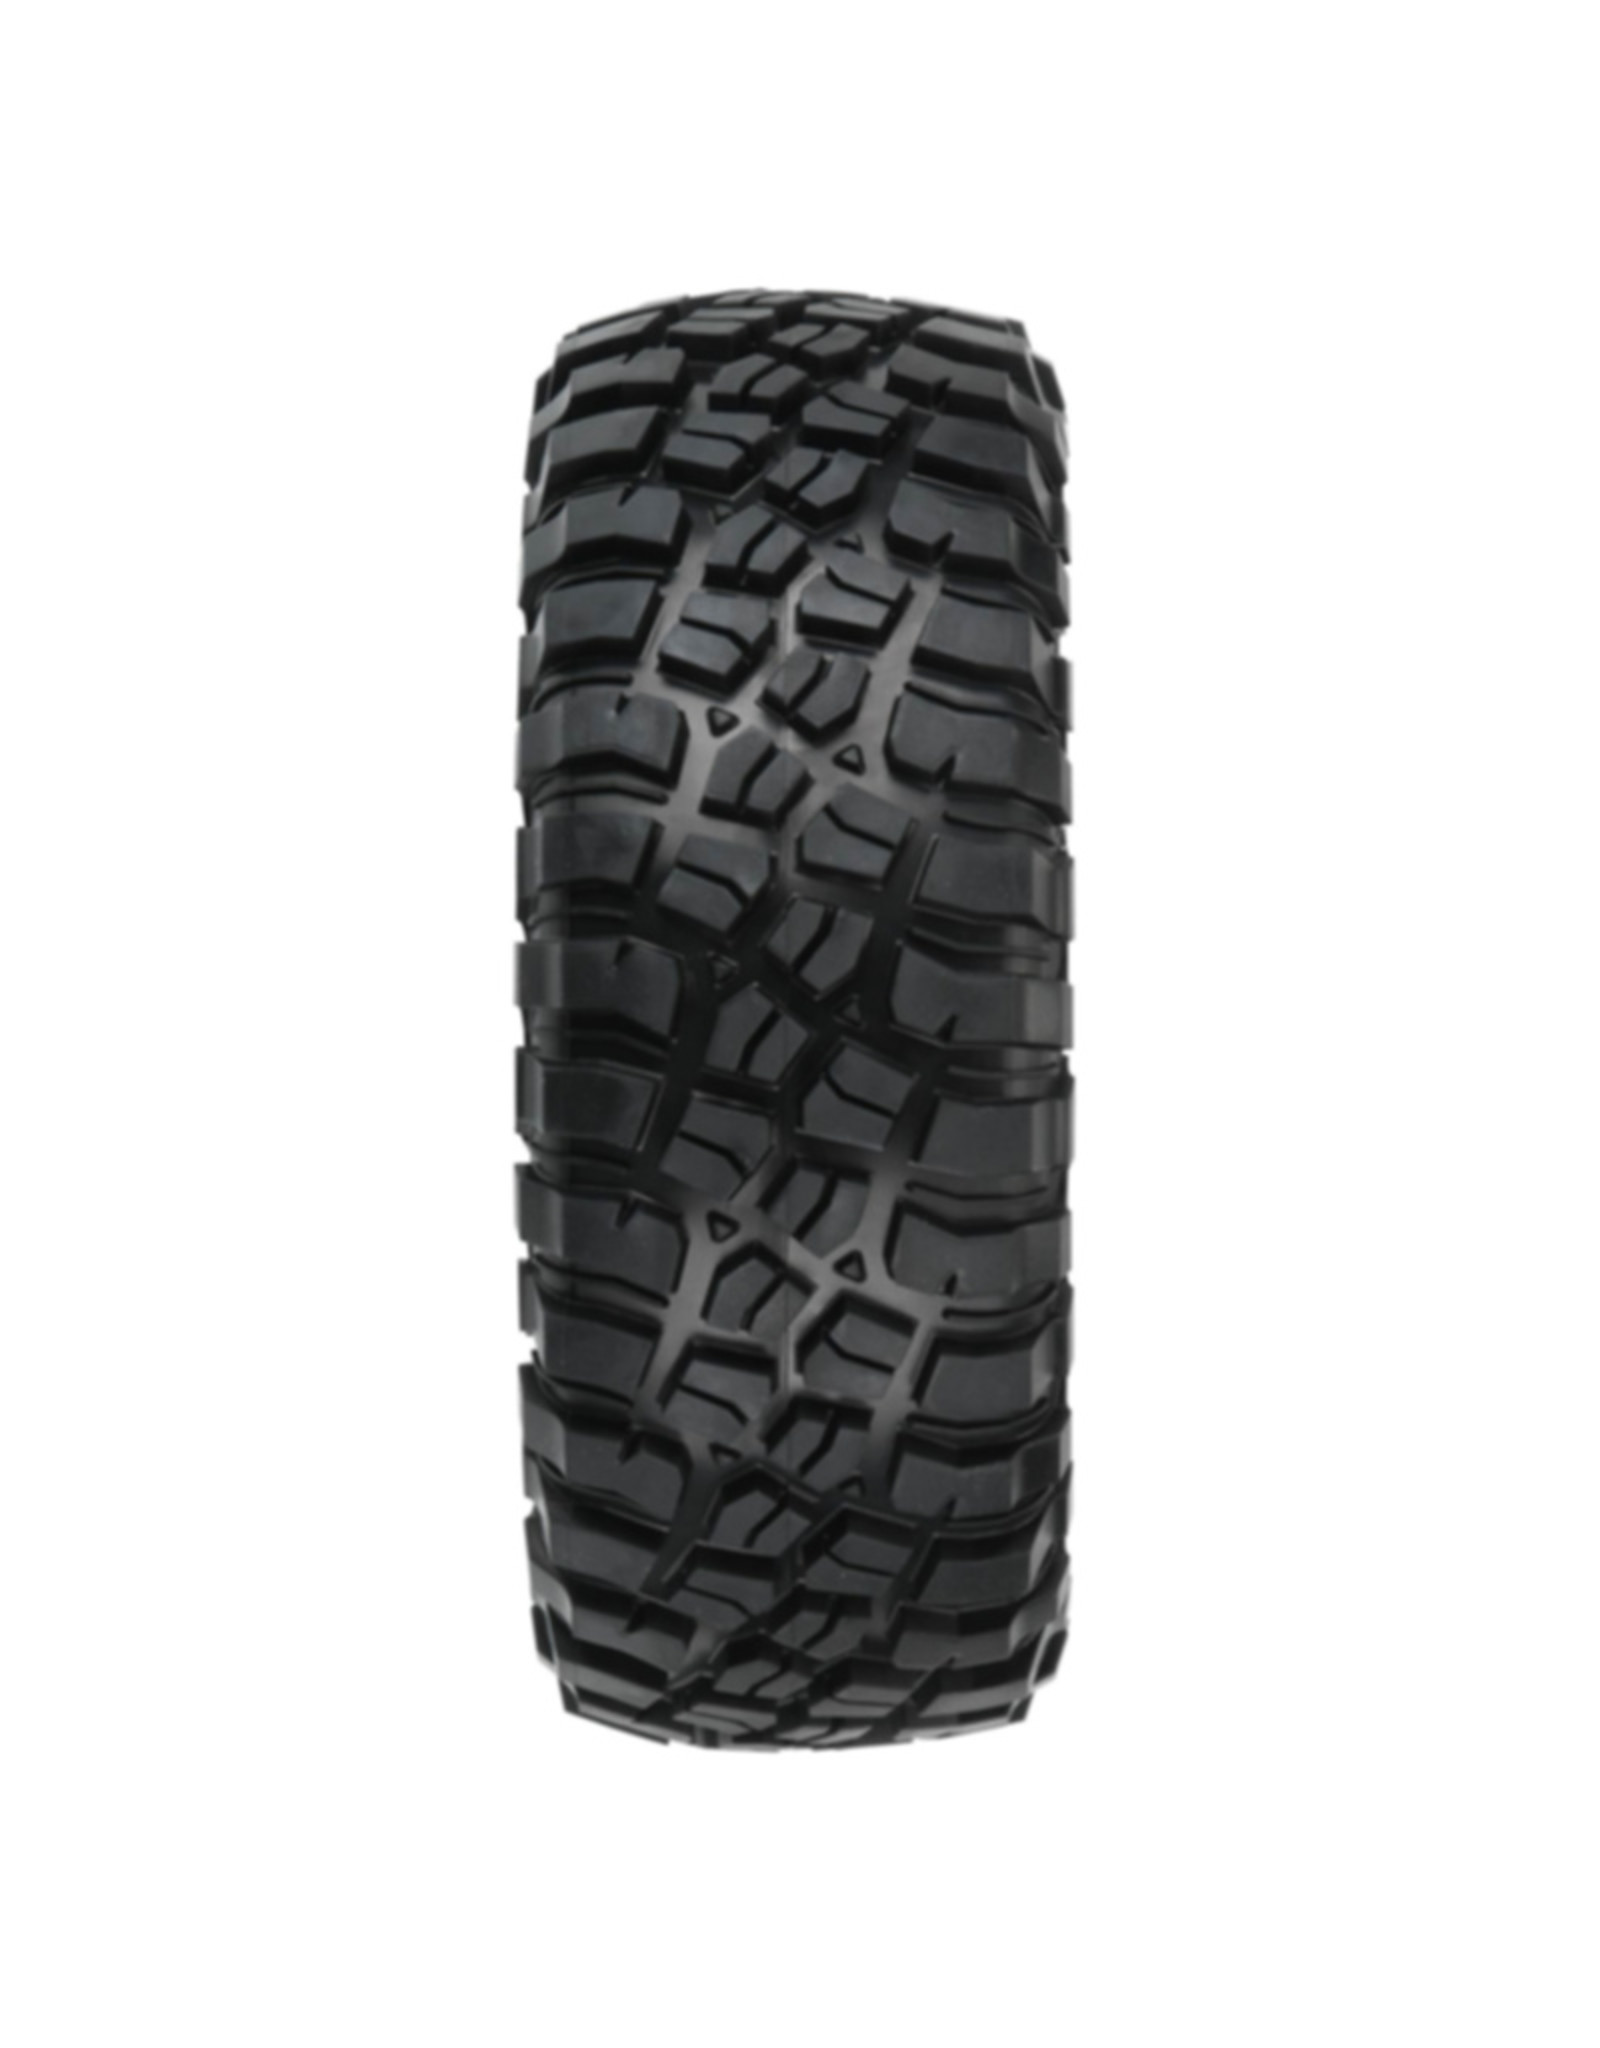 Pro-Line Racing PRO1015003		BFG T/A KM3 1.9" Predator Rock Tires (2) F/R